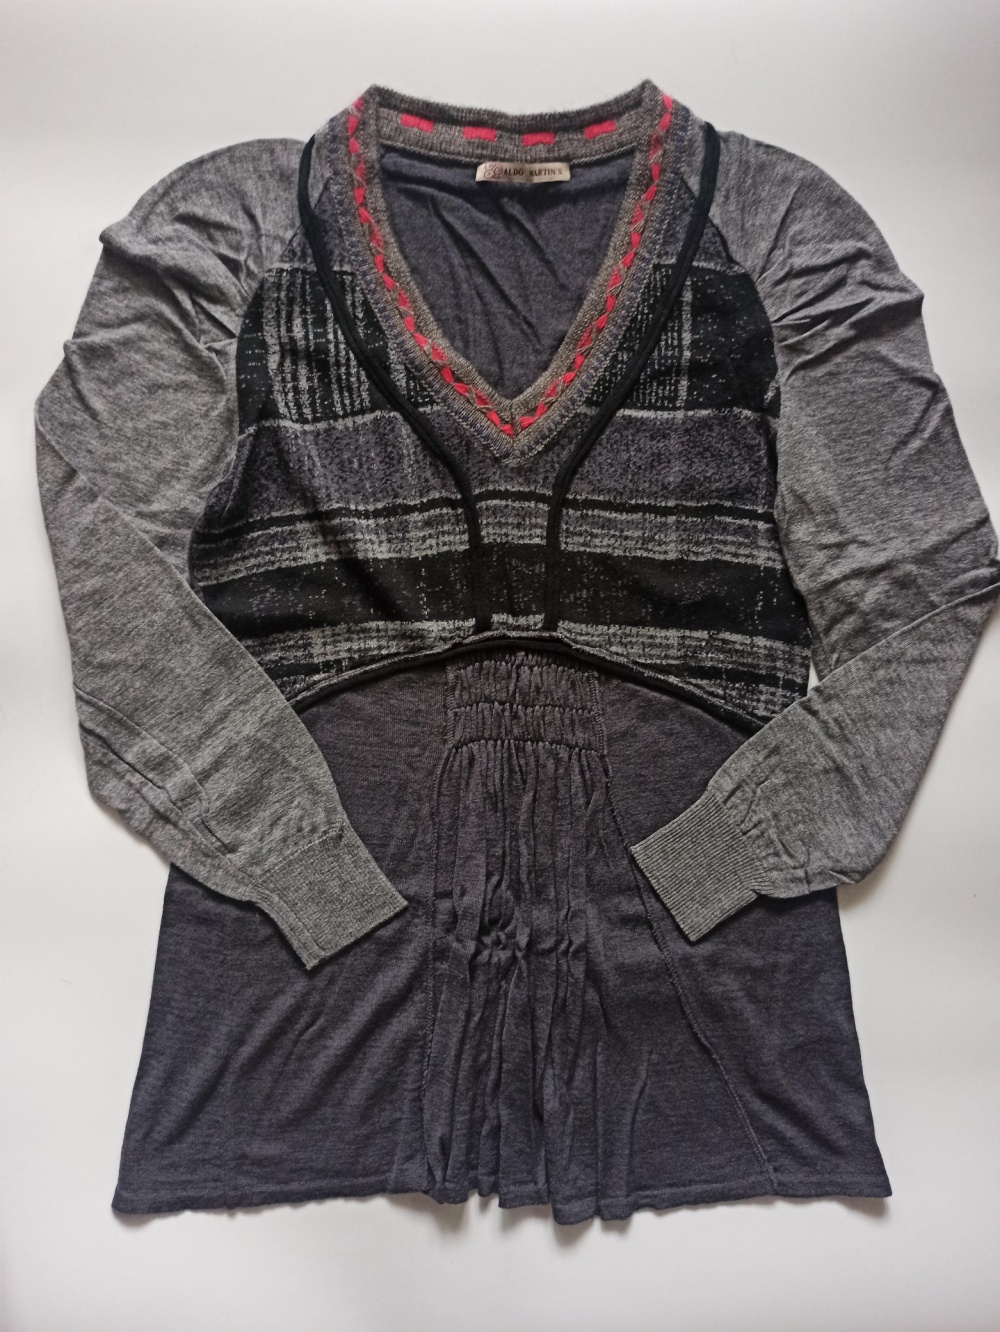 Пуловер женский Aldo Martins, размер 48